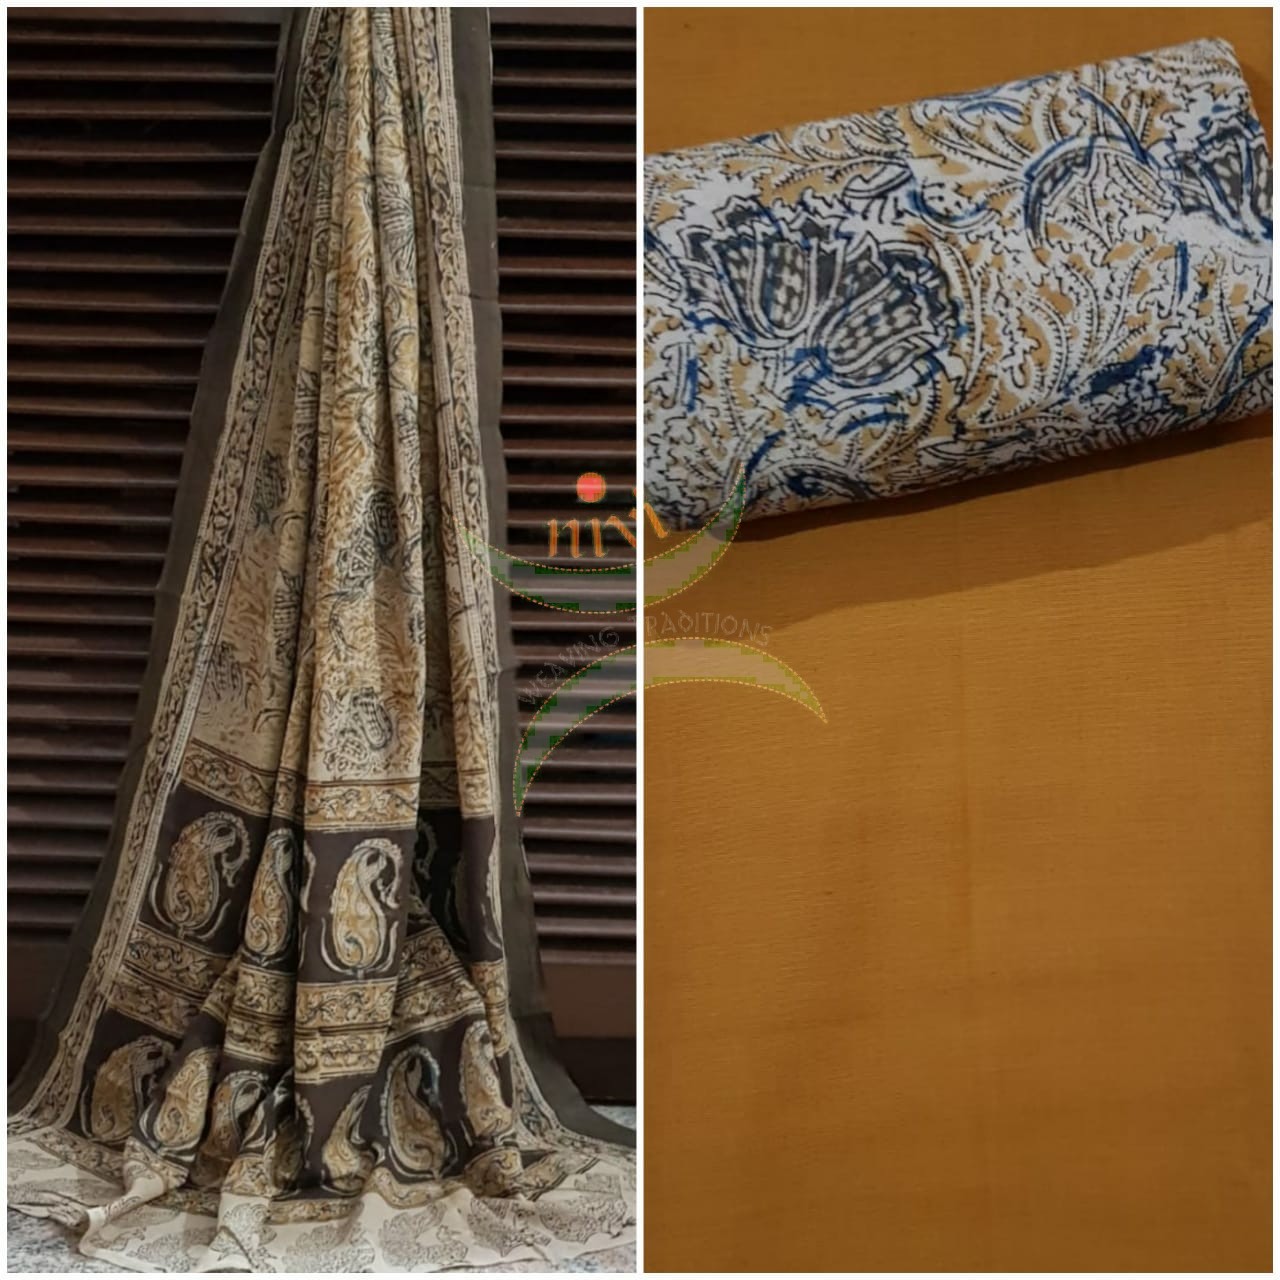 Handloom Mul cotton floral motif print kalamkari with mustard mangalgiri Cotton top.